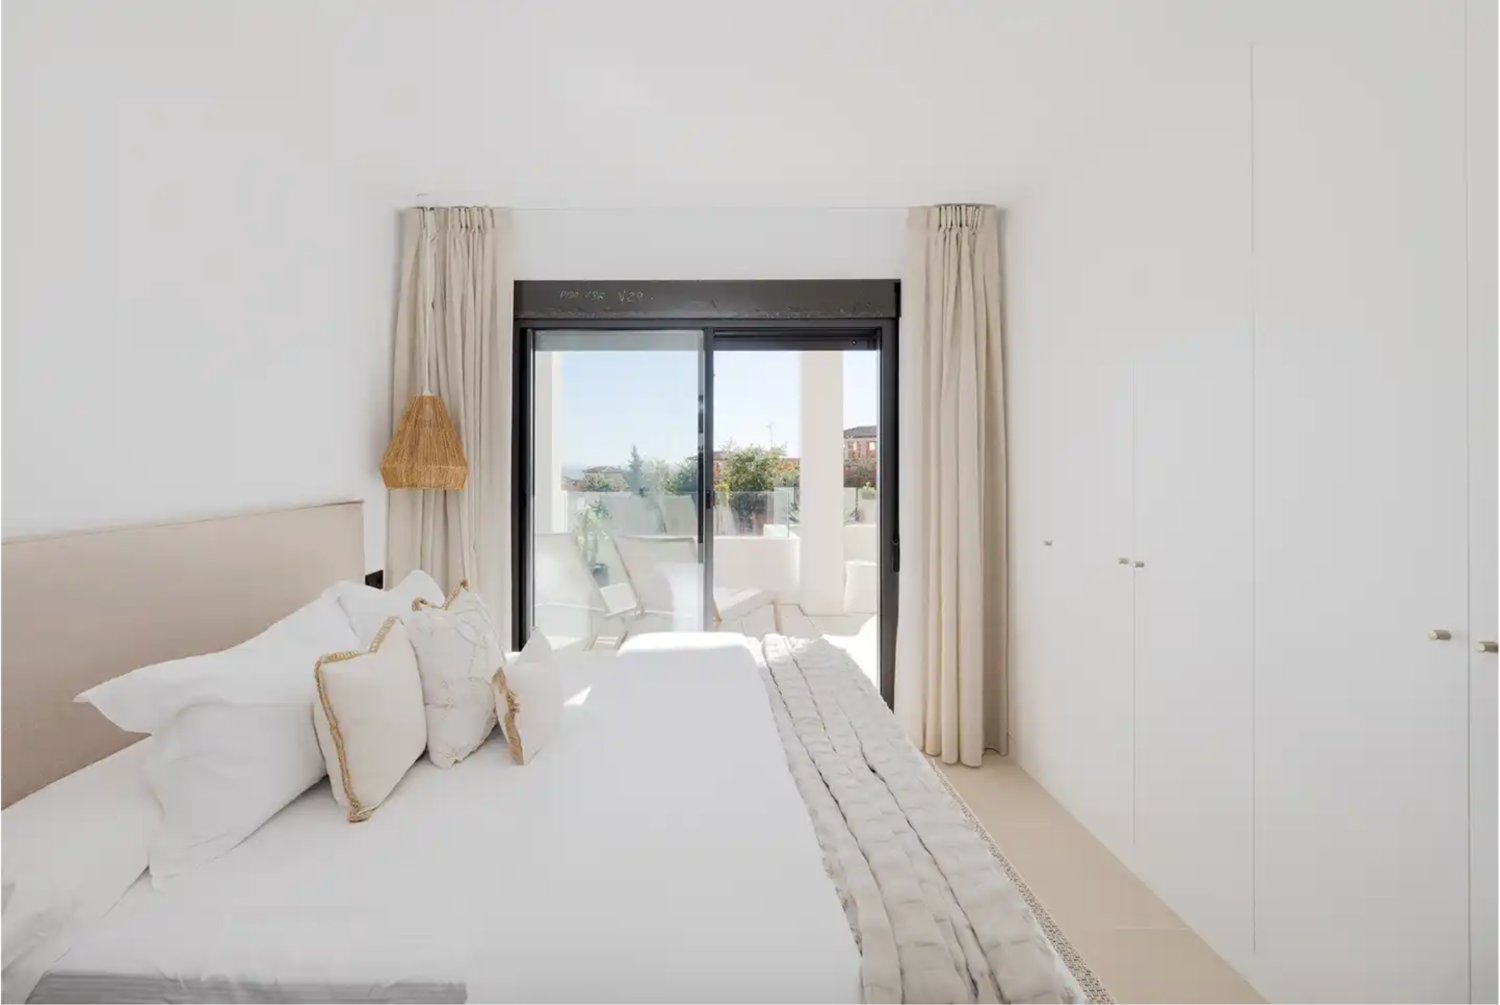 Apartment for Sale in Casares Golf - Costa del Sol